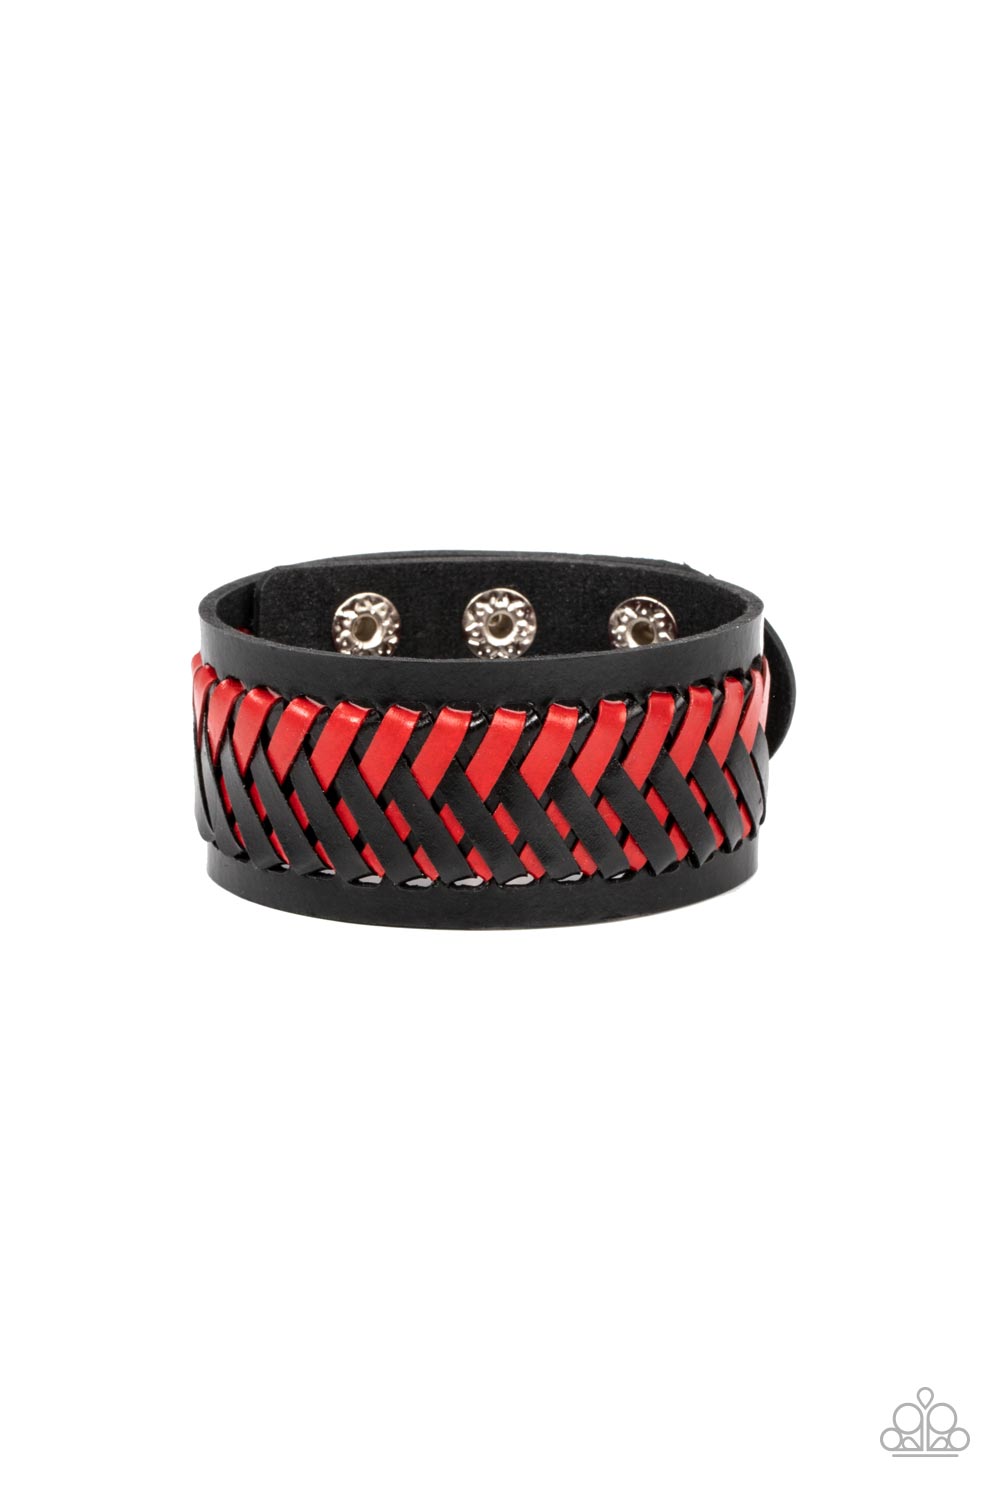 Memory Wire Bracelet, Louisville Cardinals Black and Red, Wrap or Stack Bracelet, Beaded Bracelet, Black and Red Bracelet